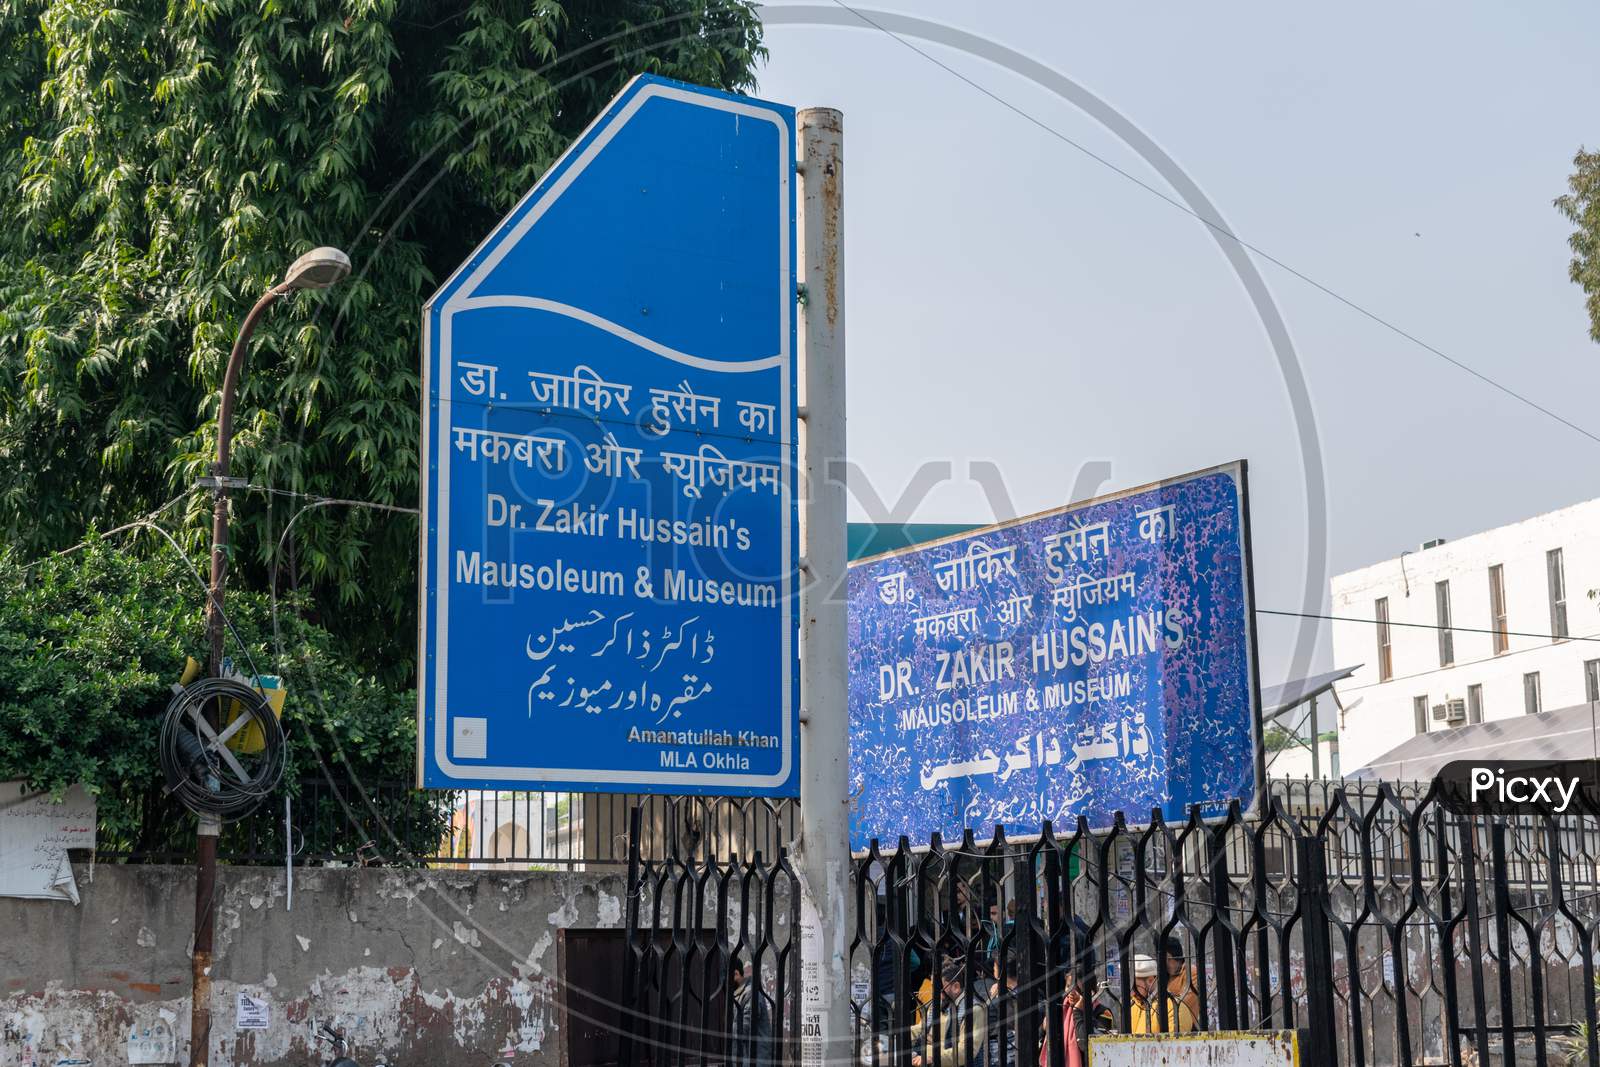 Sign board for Dr. Zakir Hussain's Mausoleum & Museum